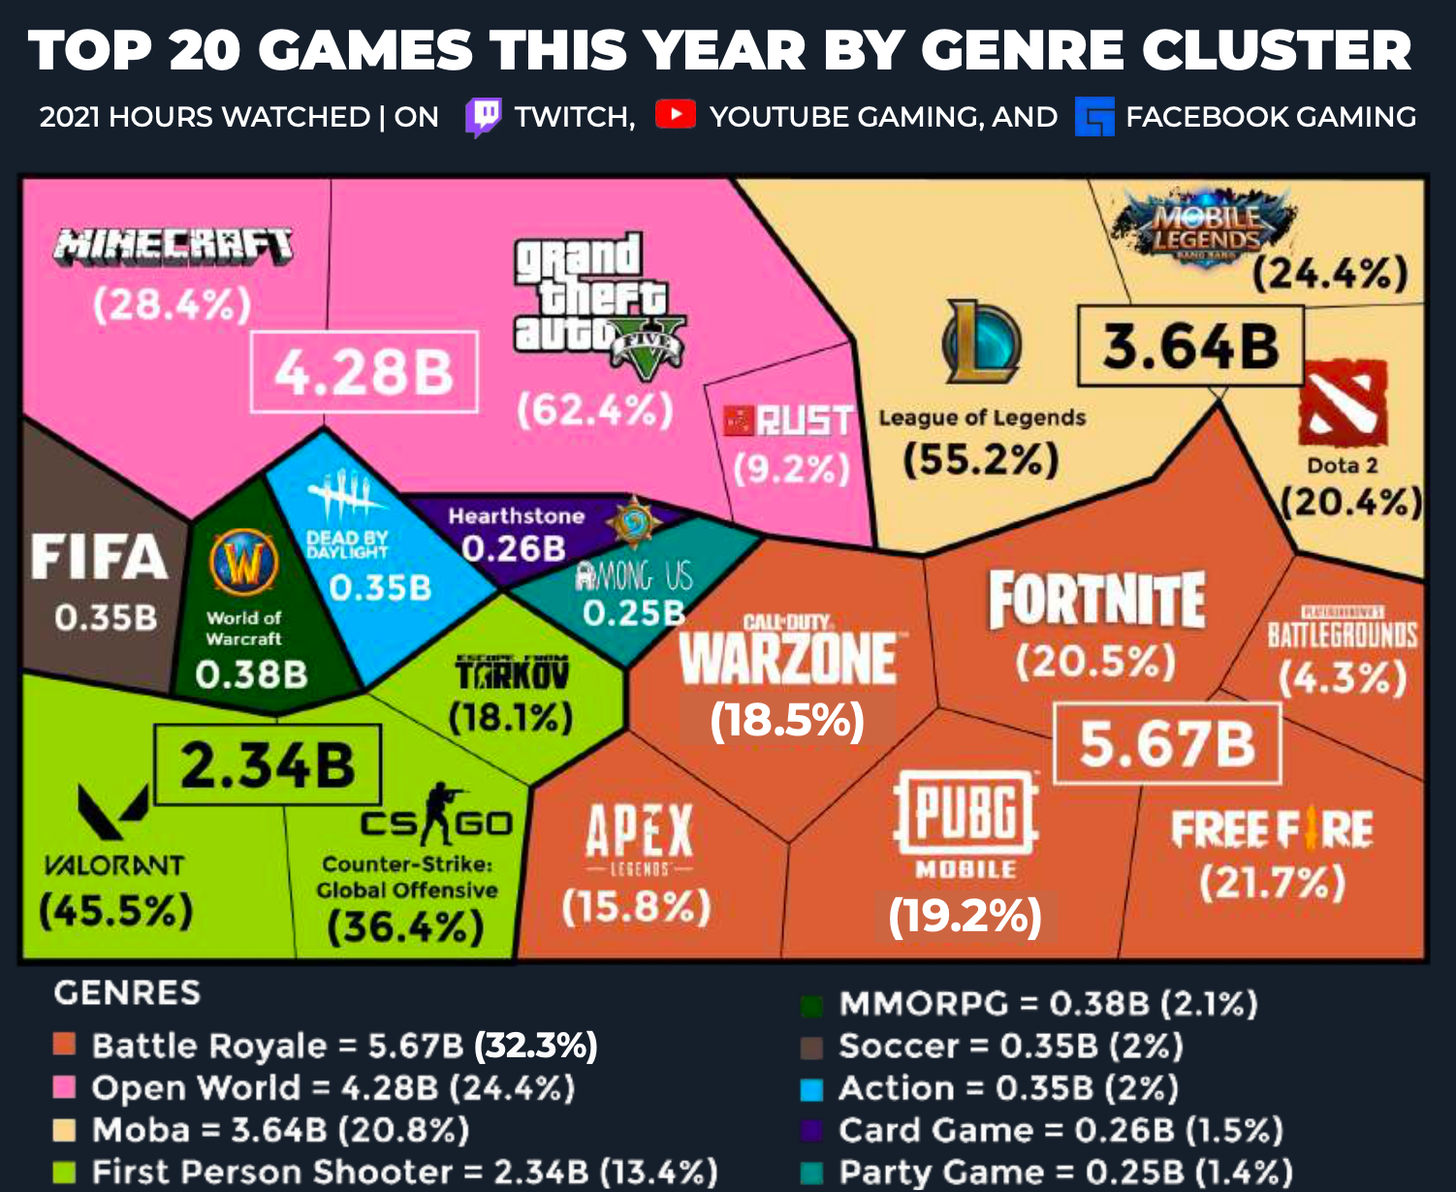 Top games by genre